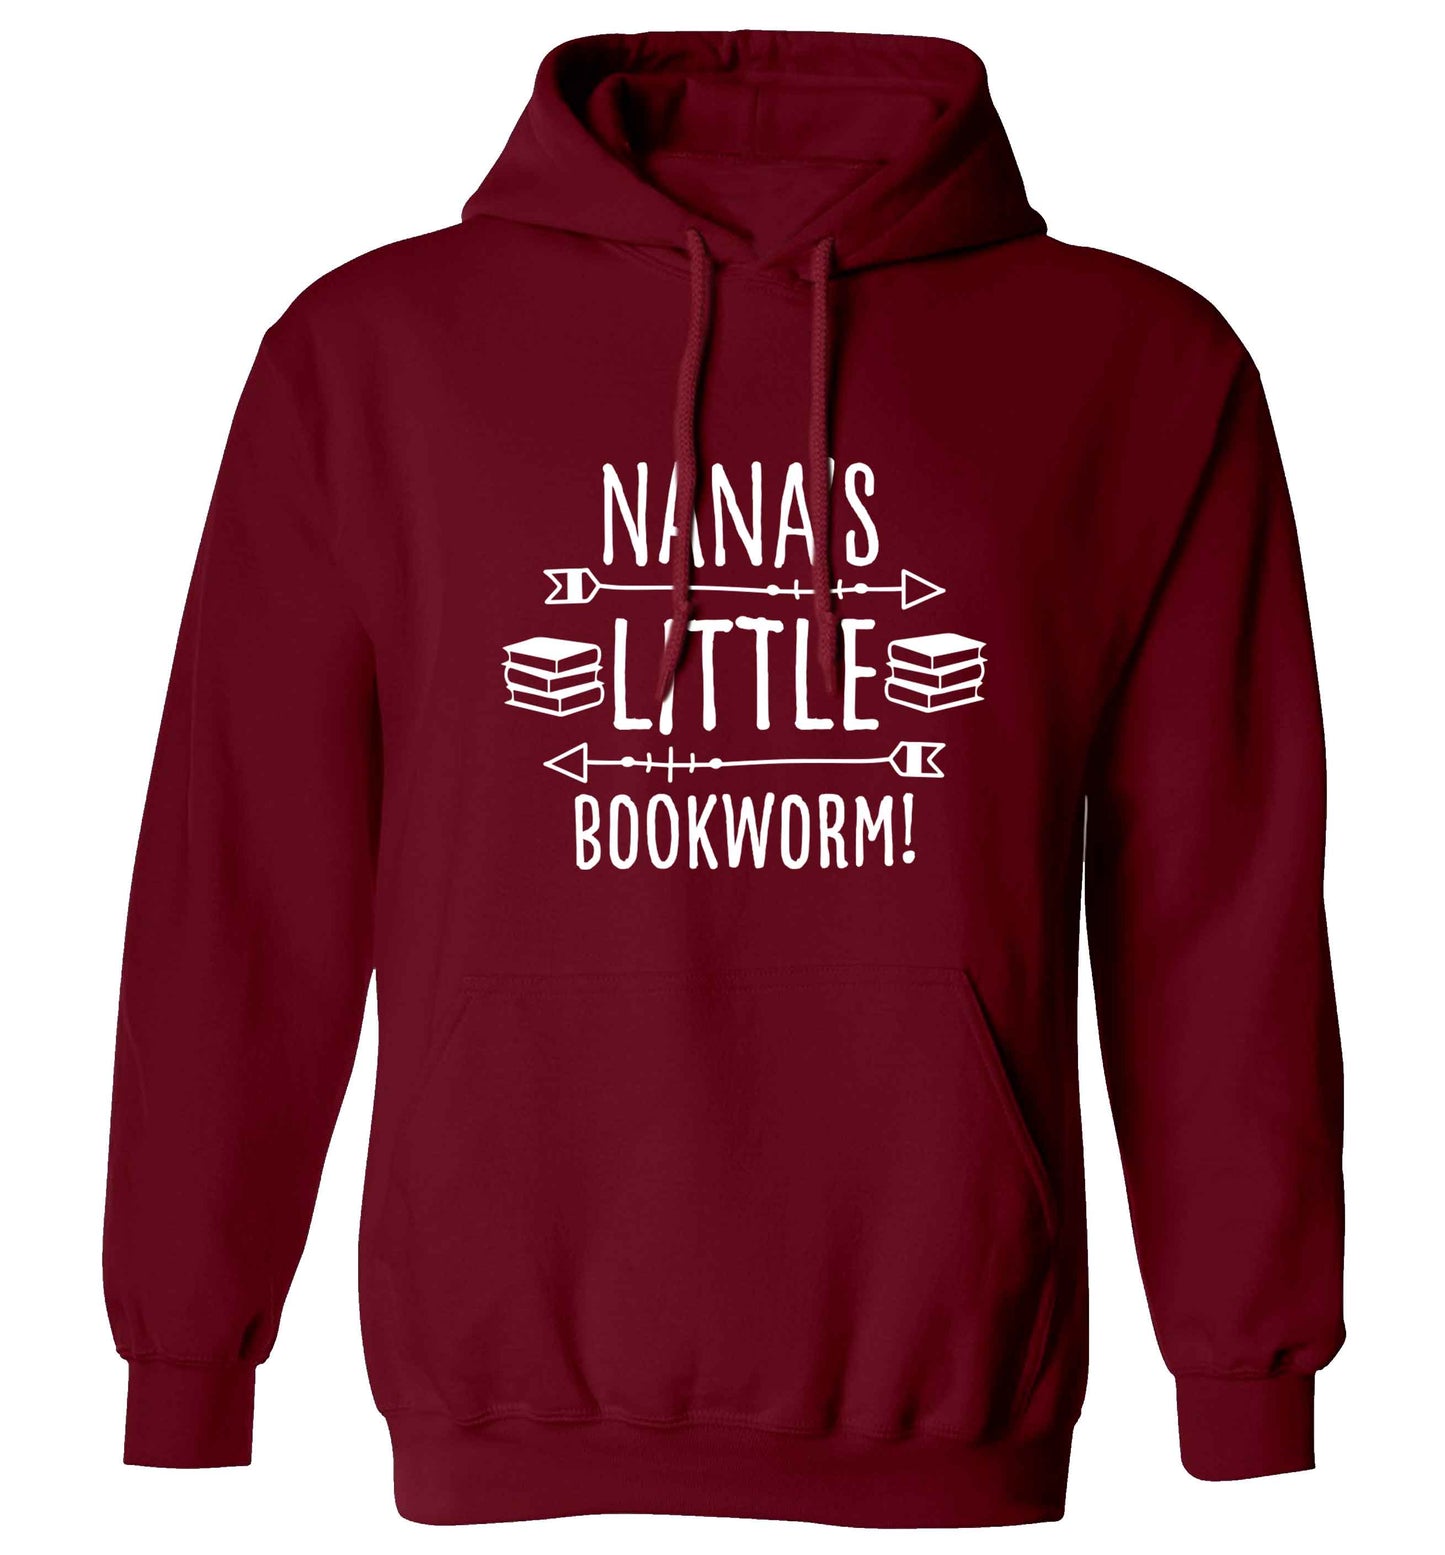 Nana's little bookworm adults unisex maroon hoodie 2XL